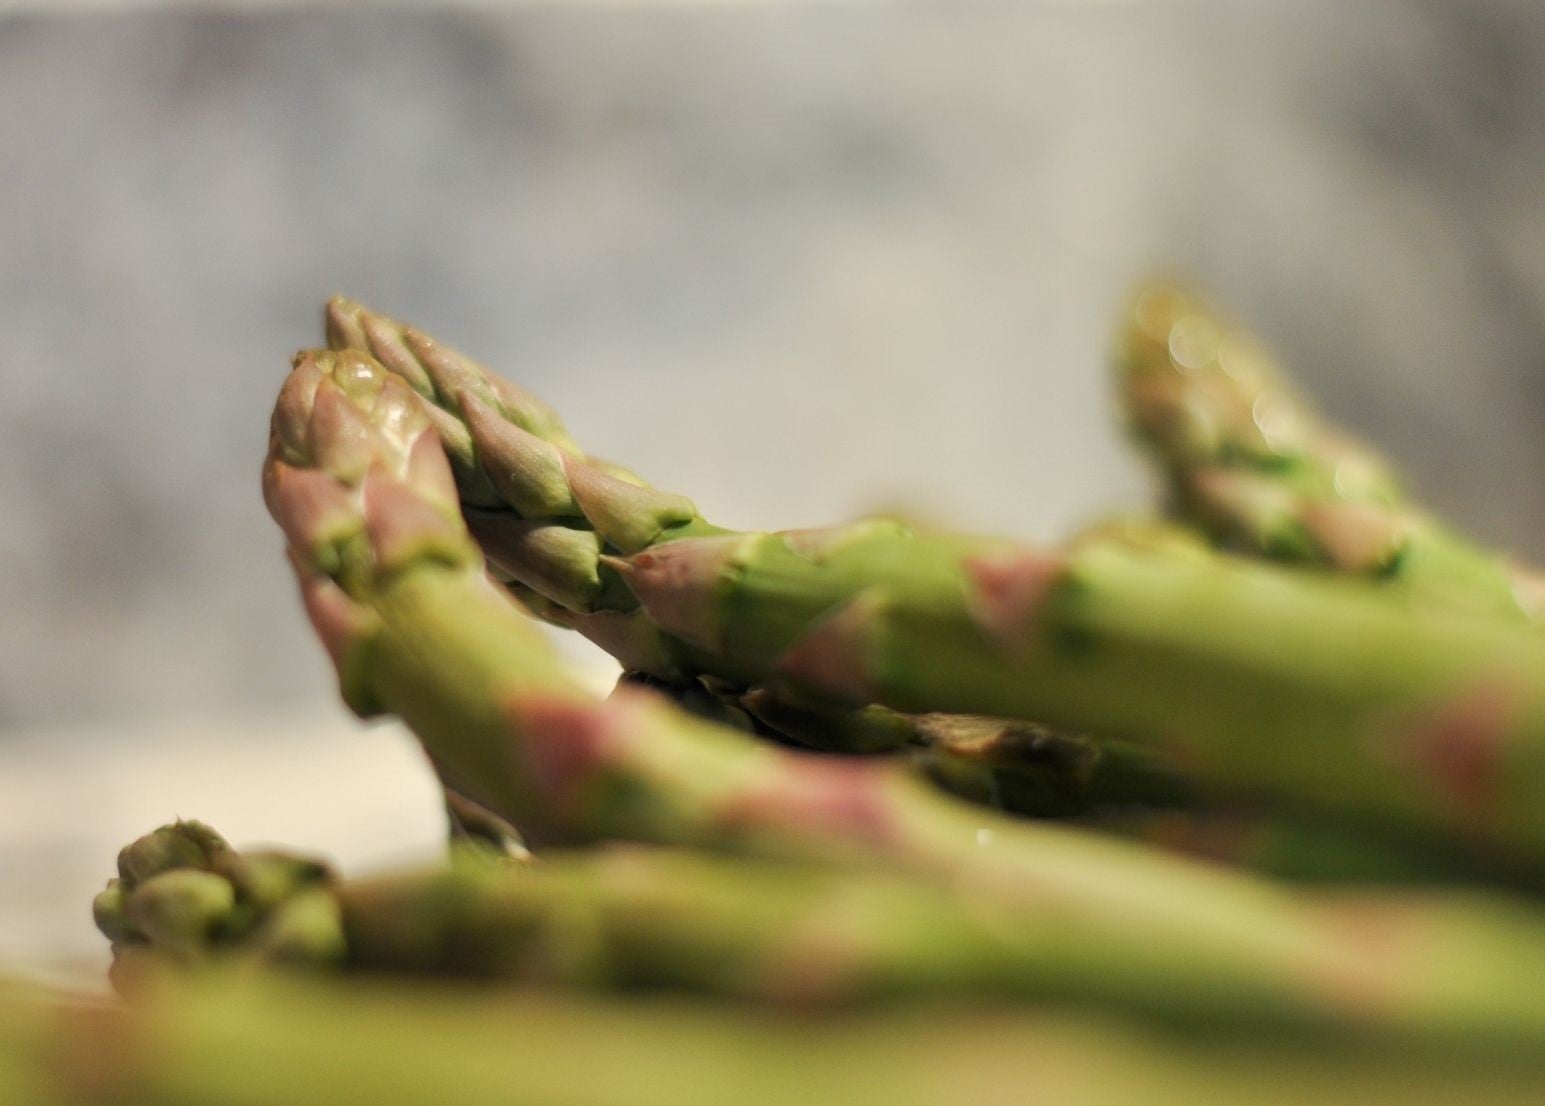 asparagus business plan